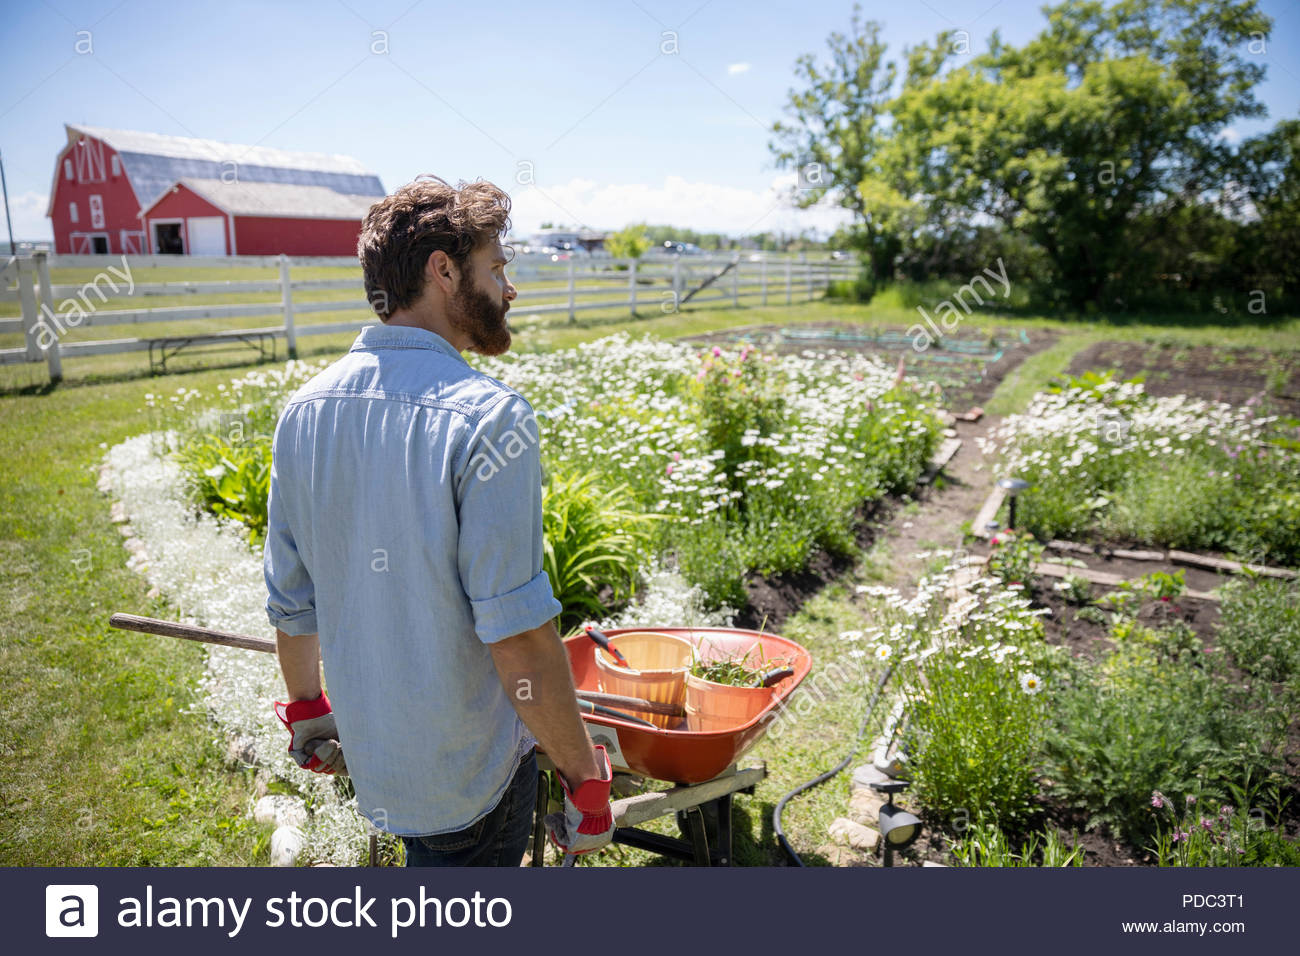 Man with wheelbarrow gardening in sunny rural garden Stock Photo